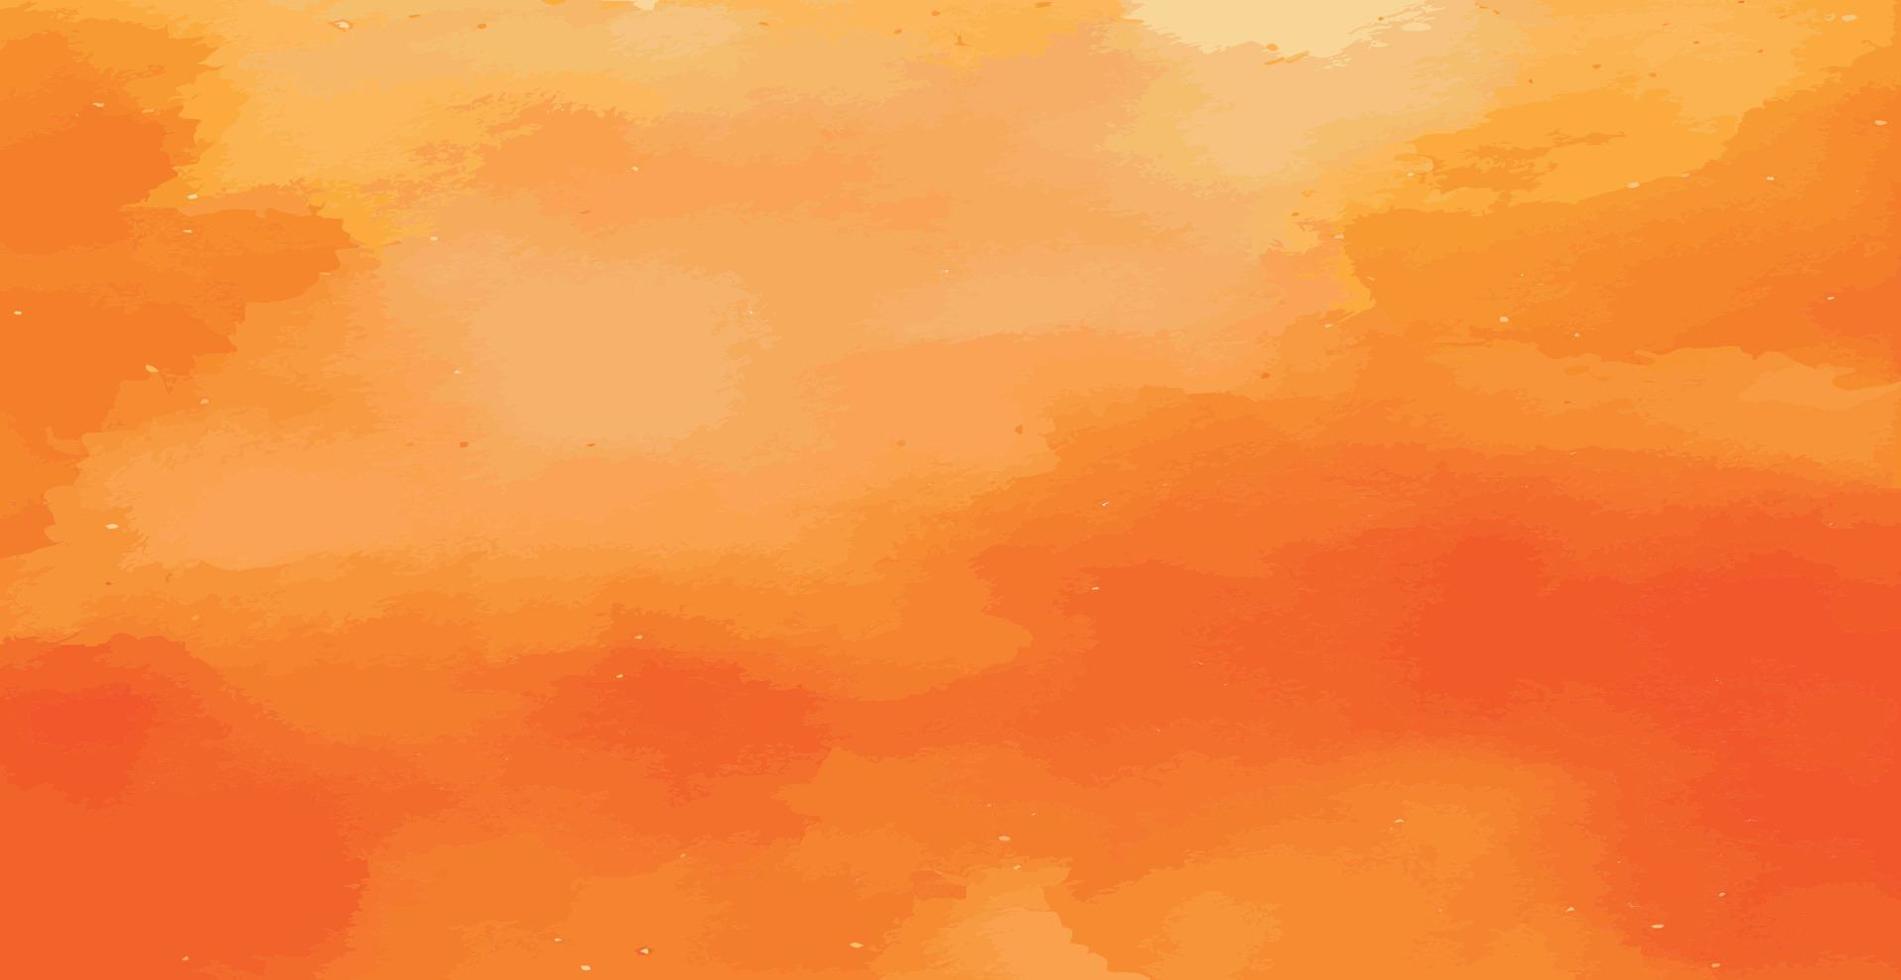 abstrato aguarela fundo laranja amarelo papel textura, colorida aguarela grunge - vetor